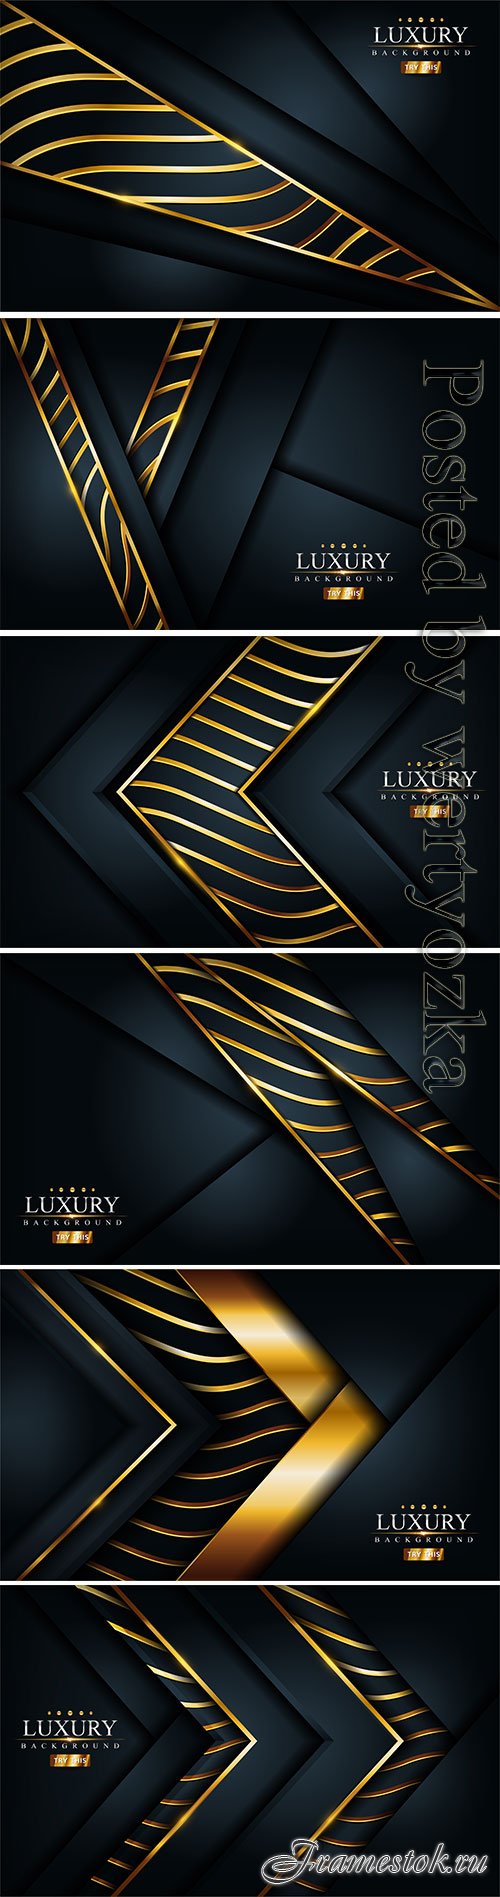 Luxury dark vector black background with golden lines composition